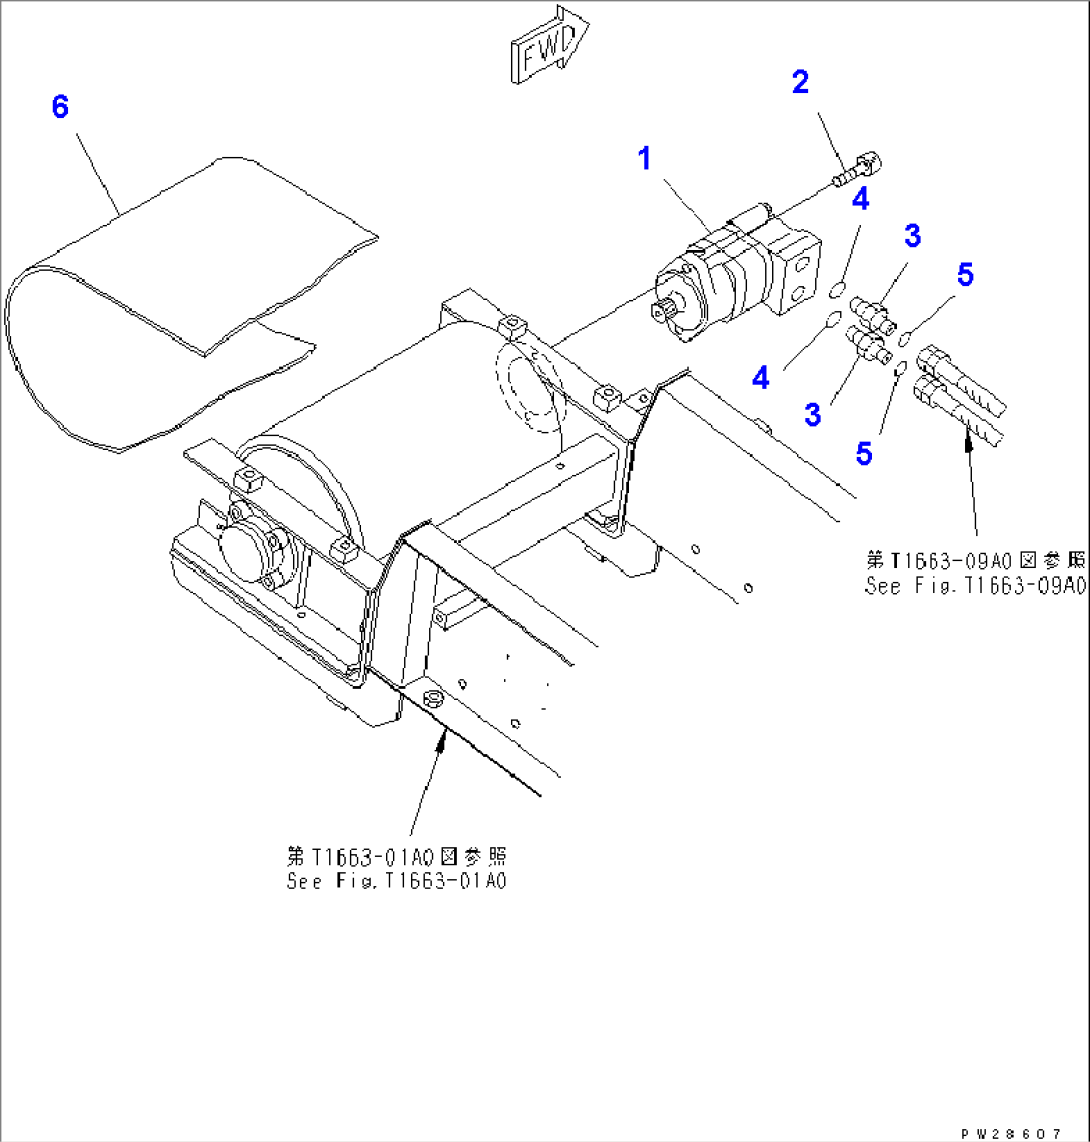 SIDE CONVEYOR (INNER PARTS) (MOTOR AND BELT)(#1301-1320)